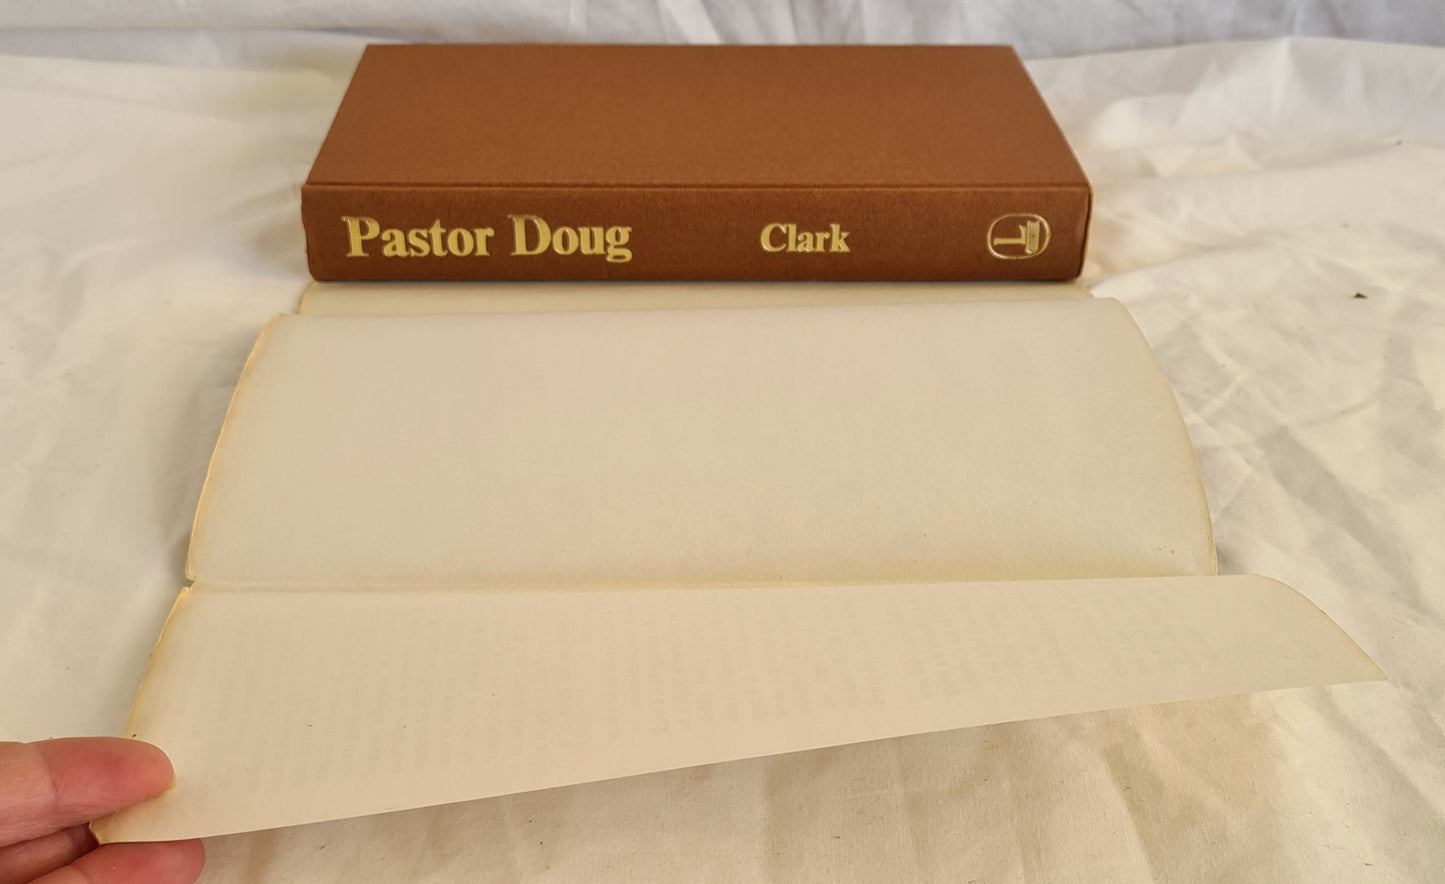 Pastor Doug by Mavis Thorpe Clark